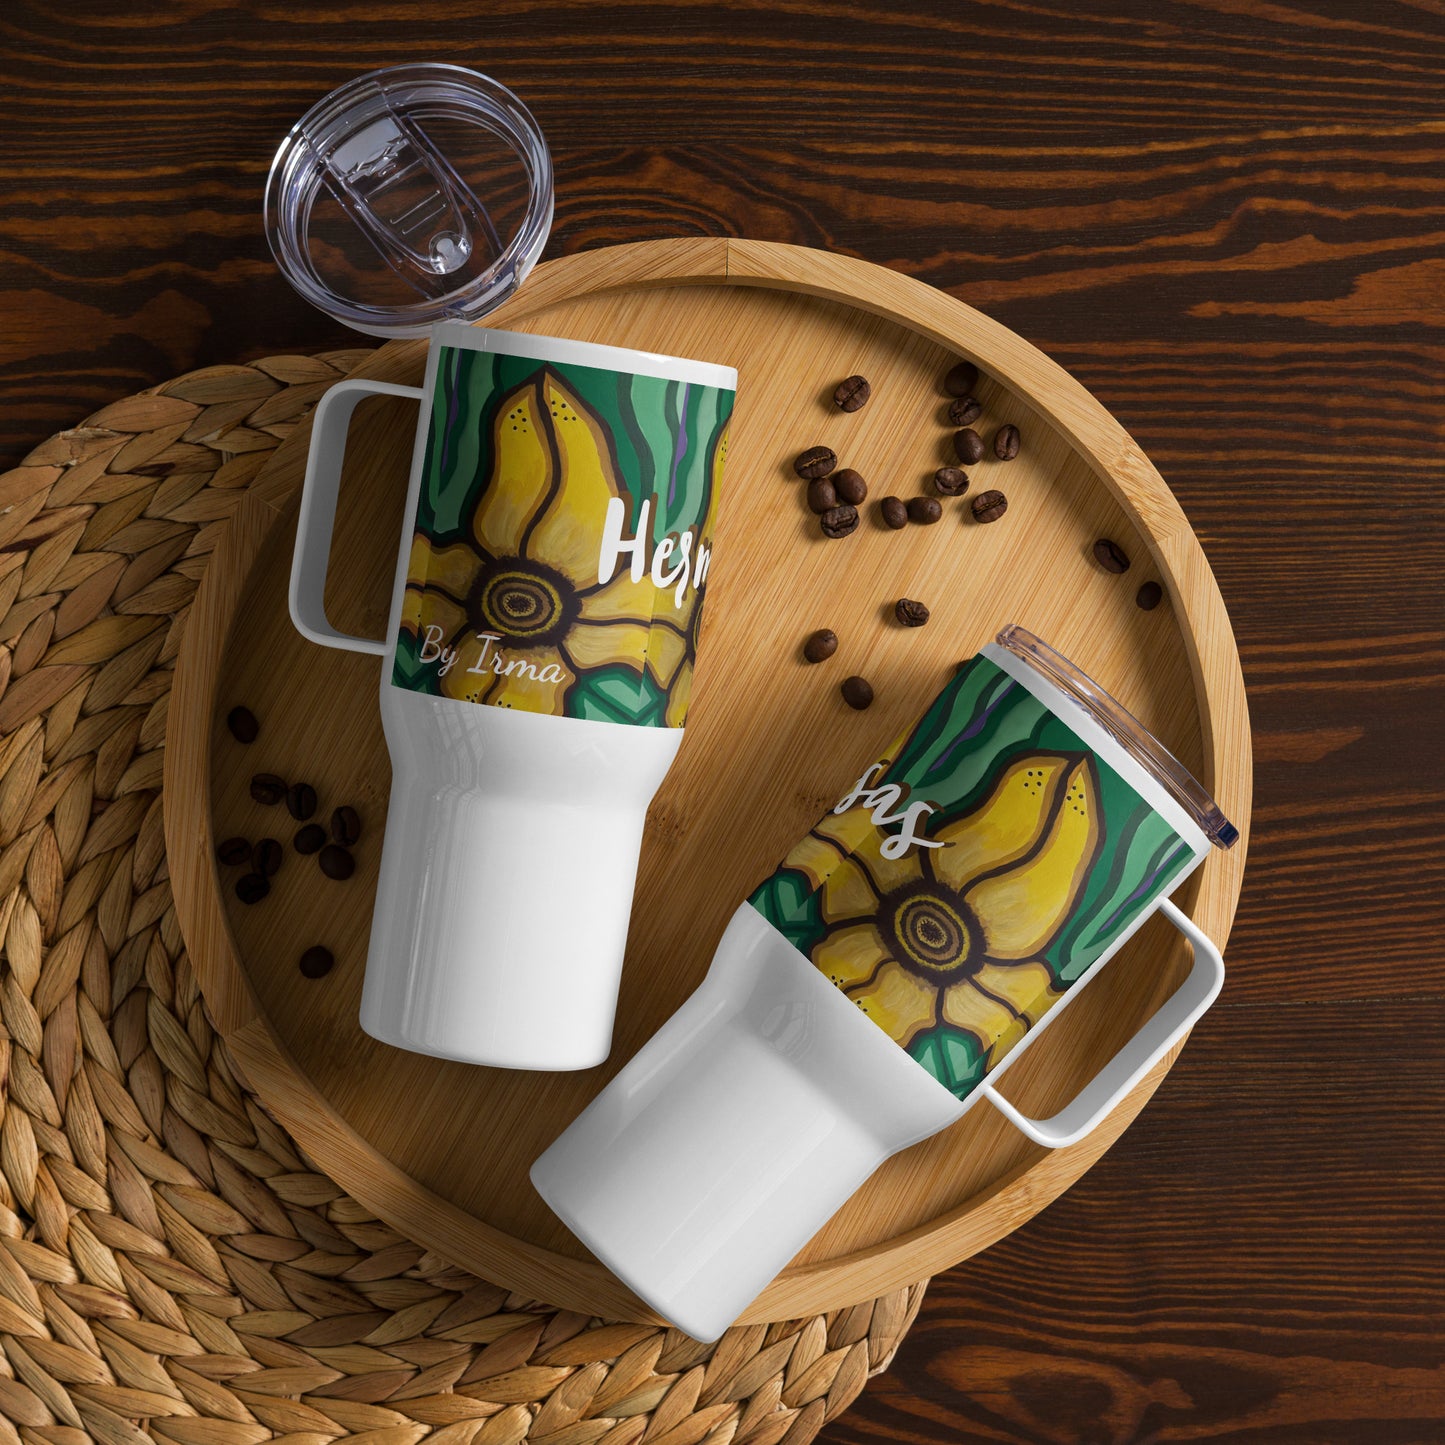 Hermosas by Irma Travel mug with a handle